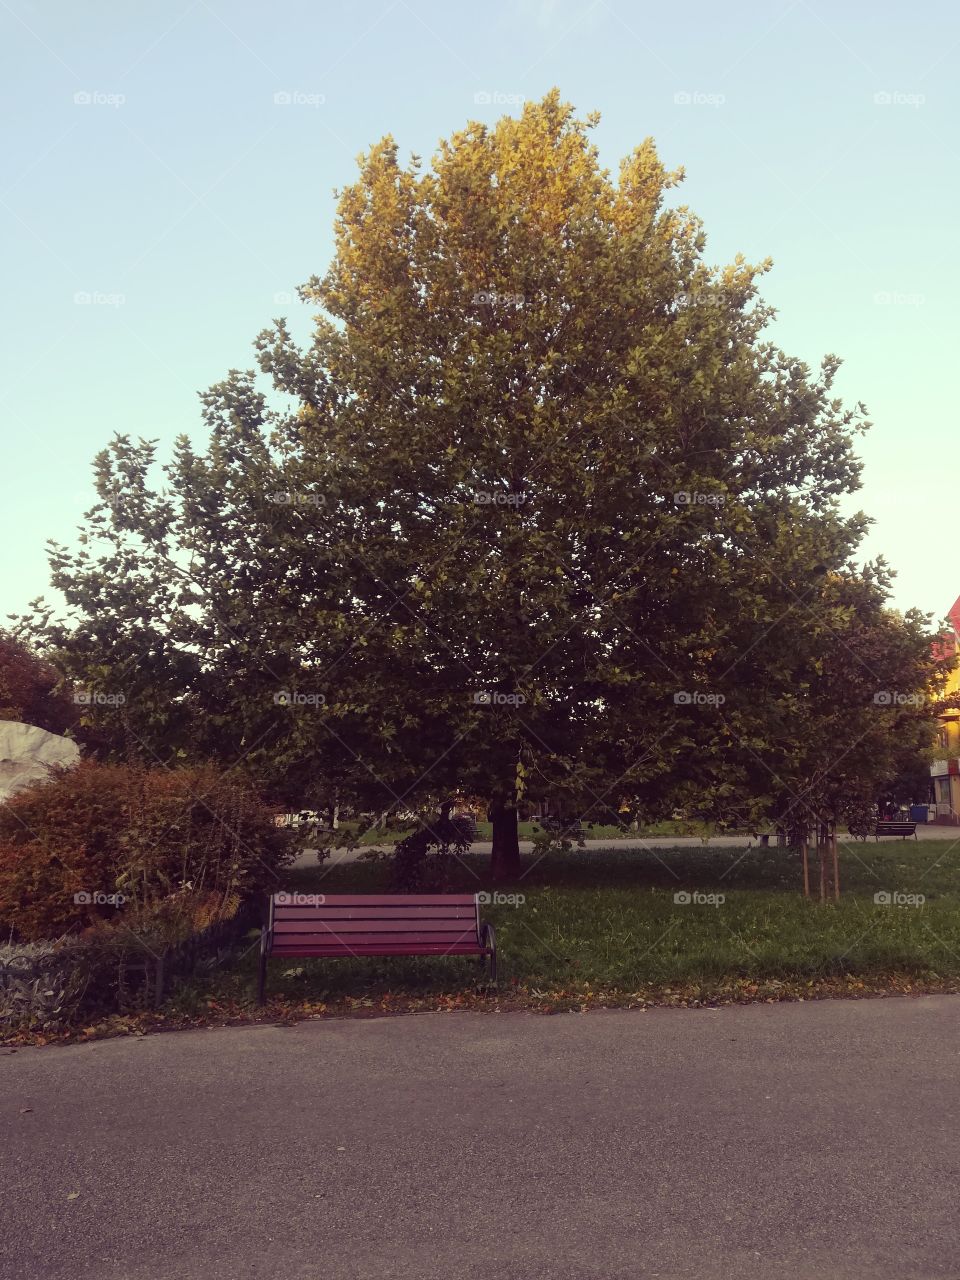 BIG tree and bench